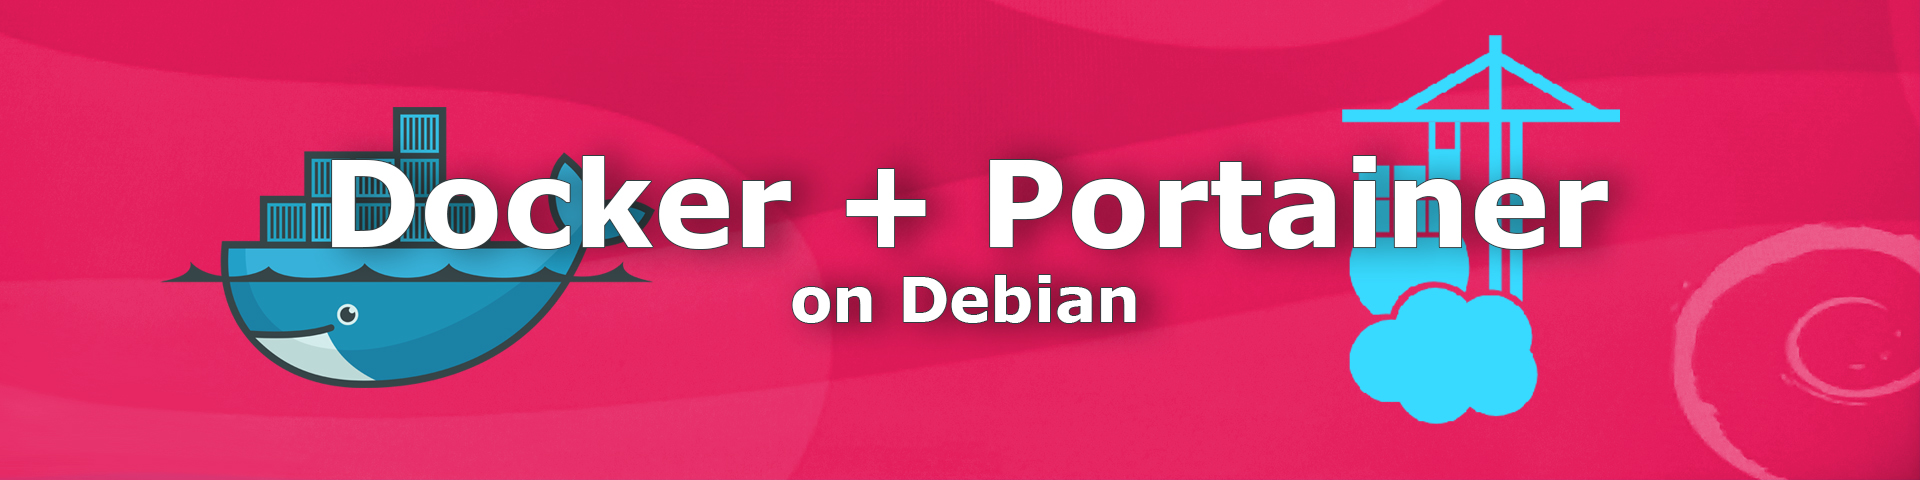 Docker and Portainer in Debian